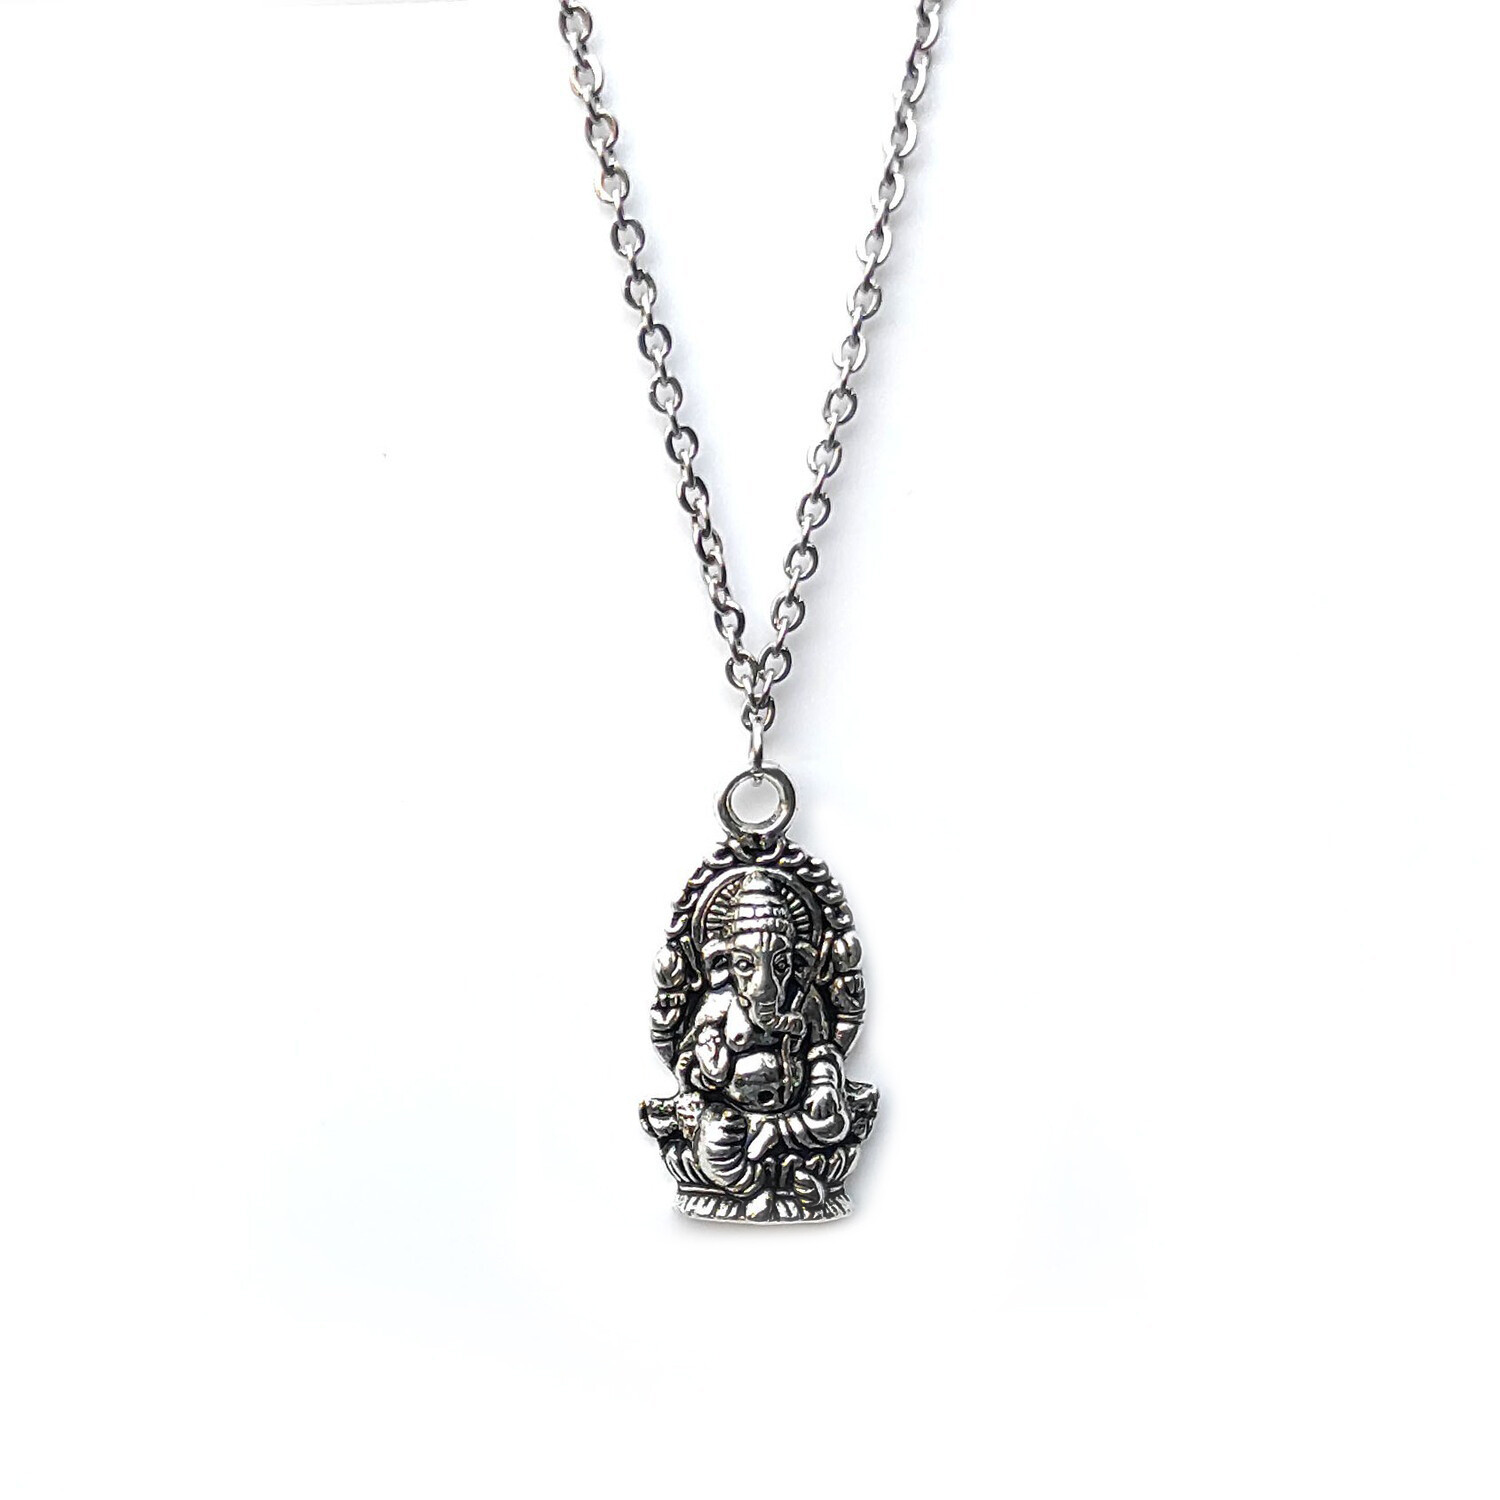 Ganesha necklace (Silver toned)